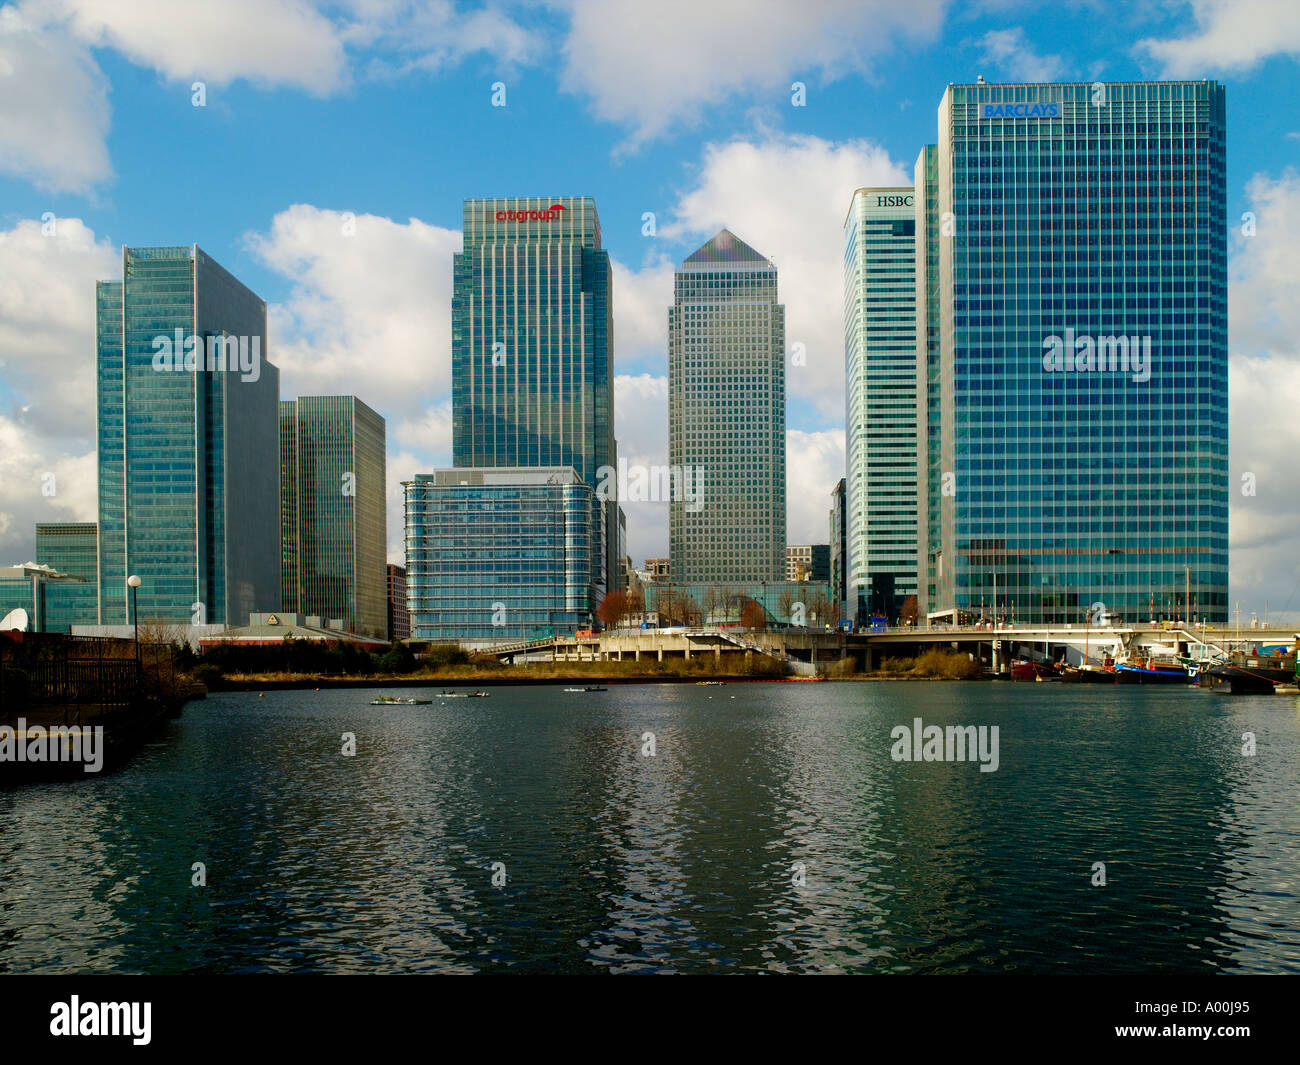 Canary Wharf London Financial centre Stock Photo